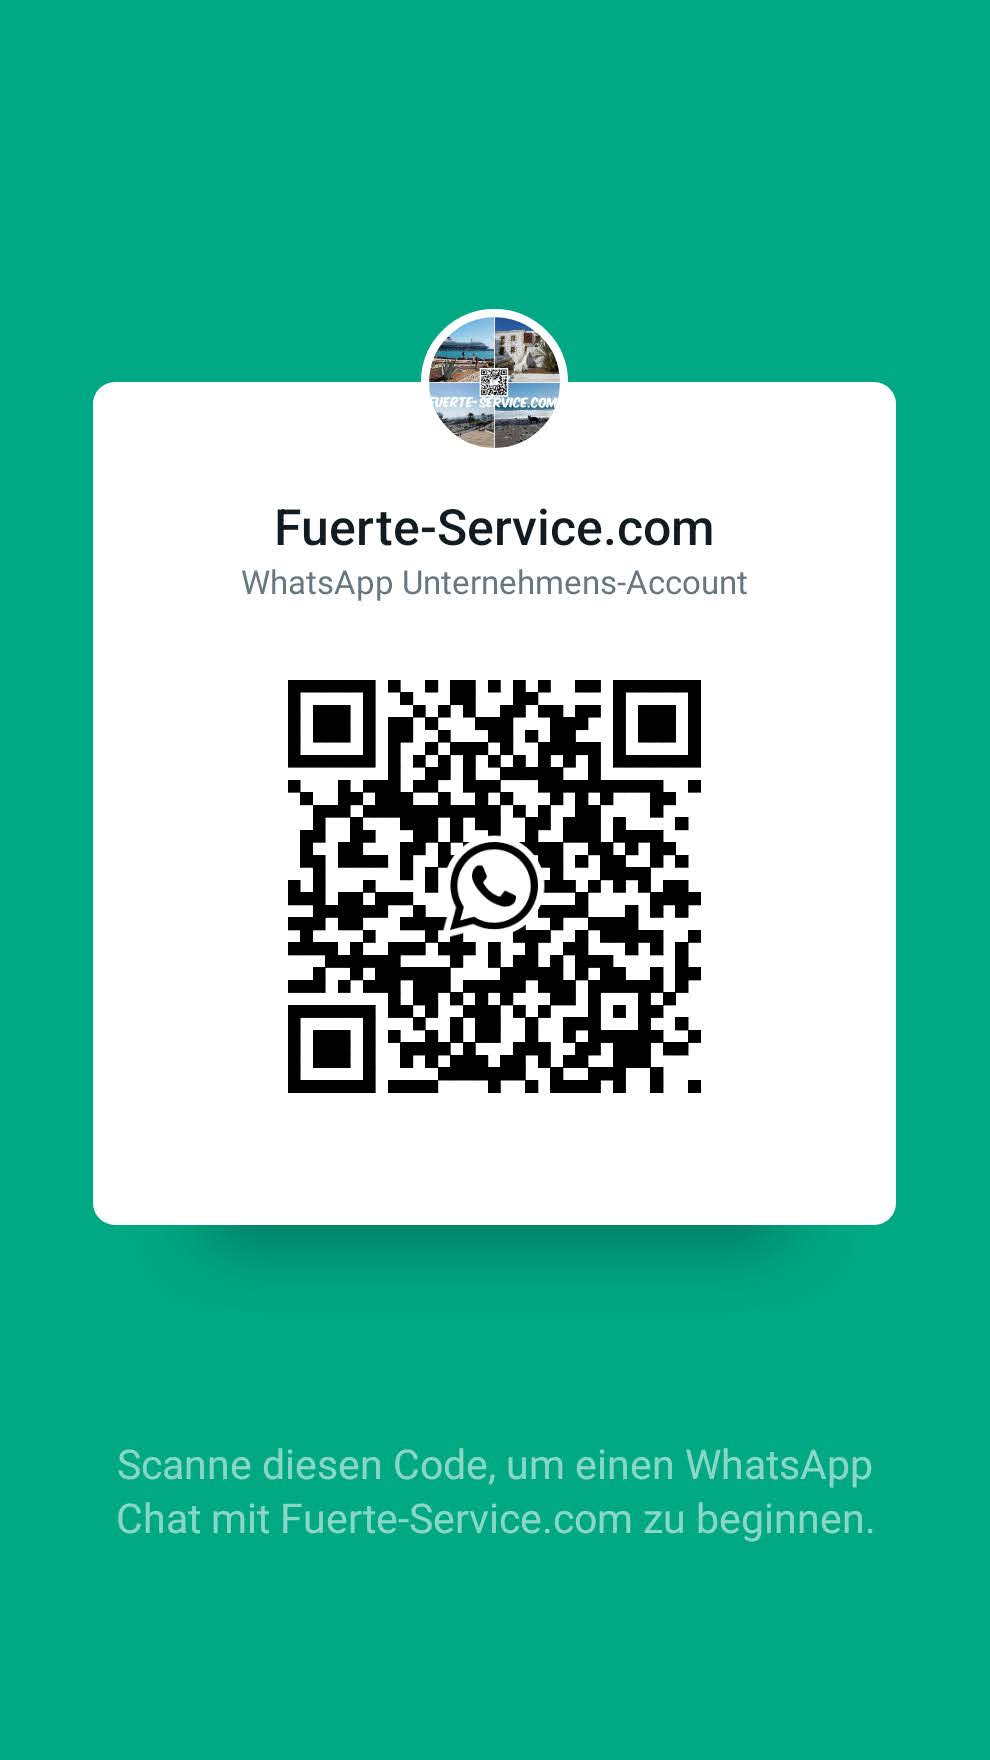 QR-Code WhatsApp Fuerte-Service.com